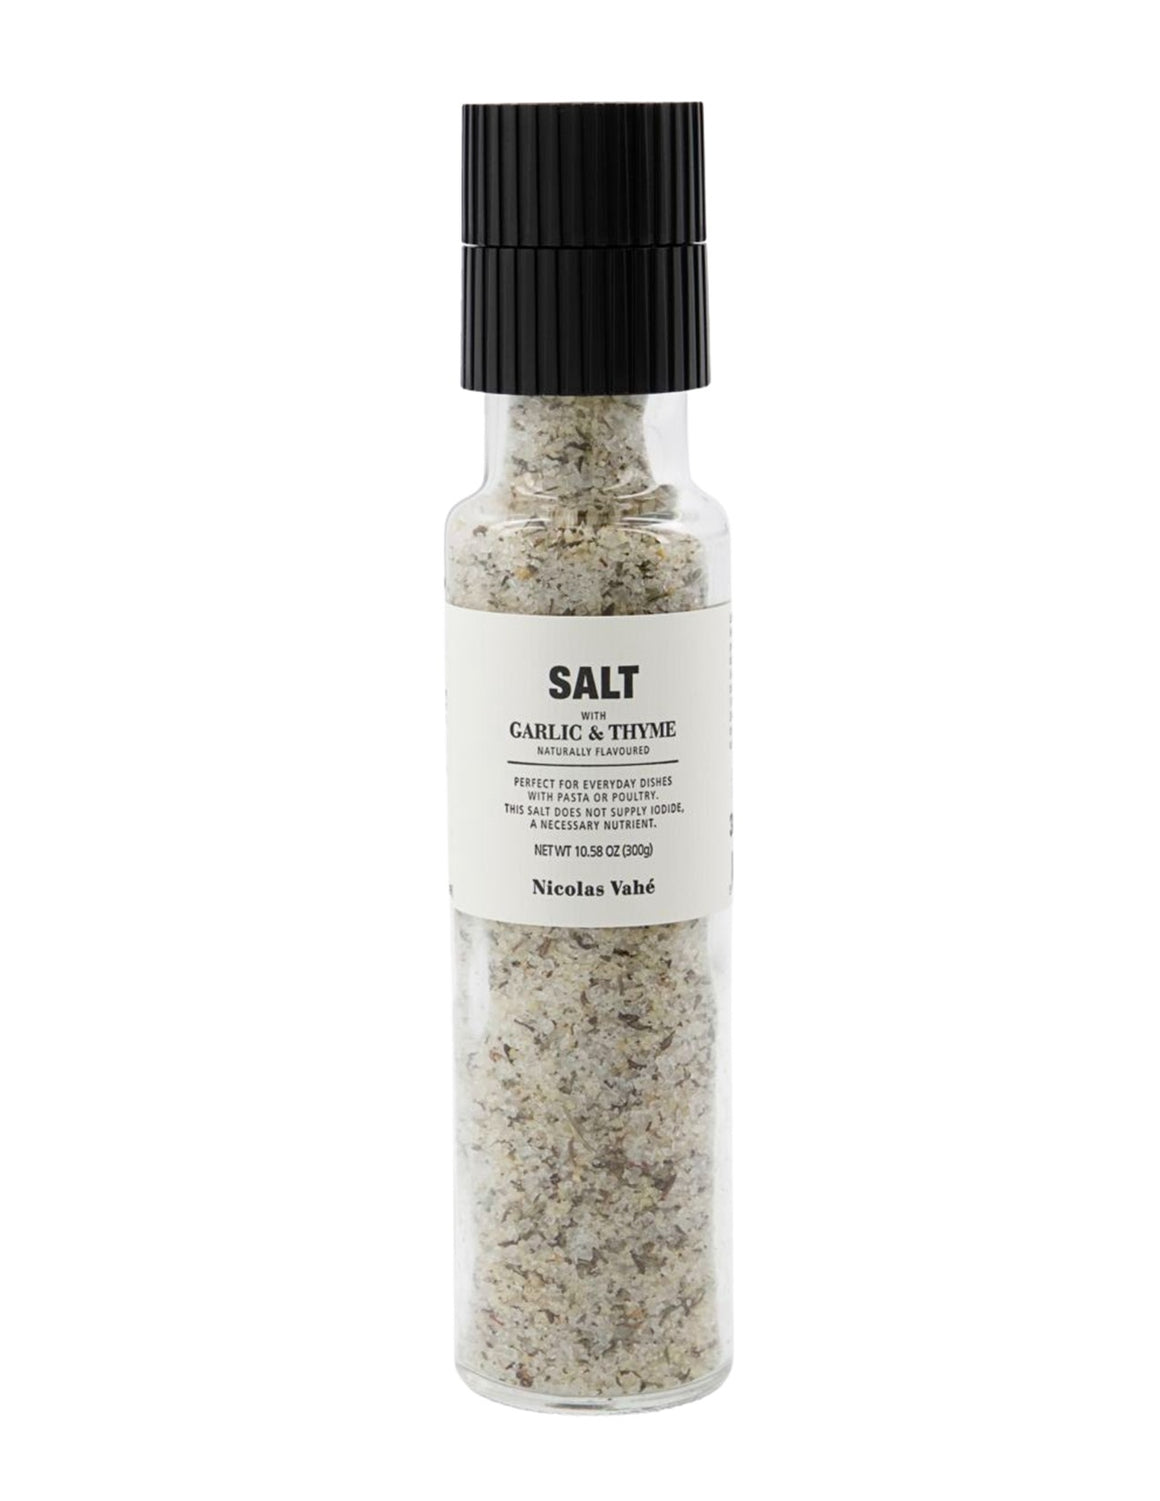 Nicolas Vahé Salt - Garlic & Thyme